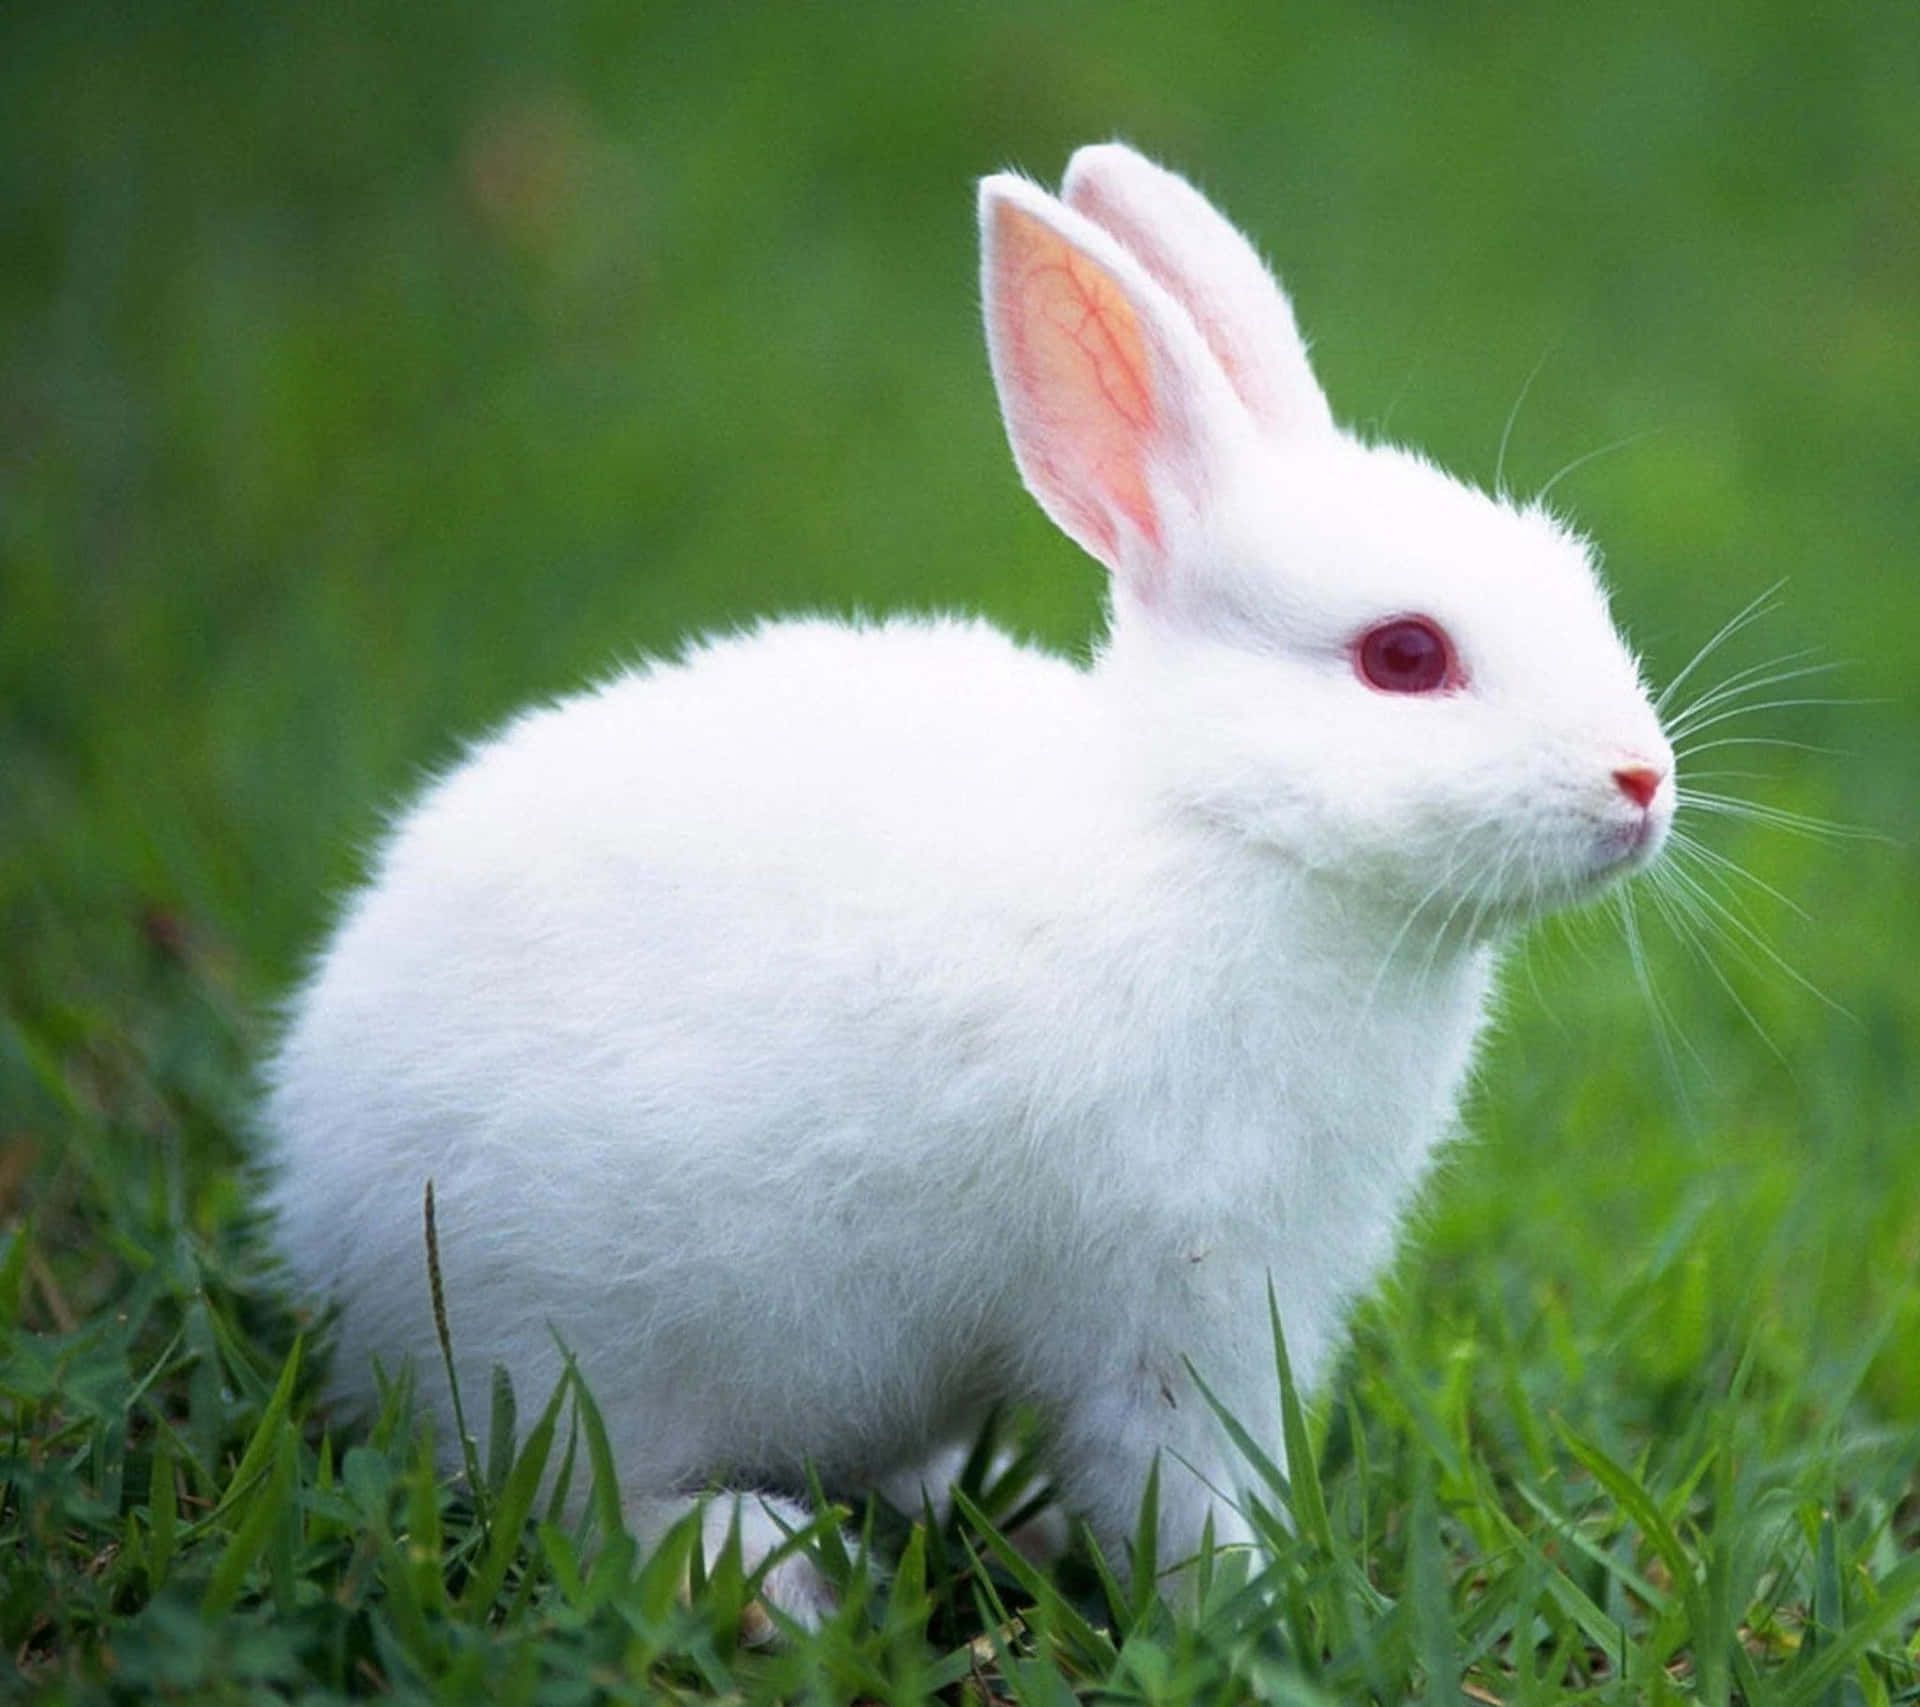 Image  A wild rabbit in its natural habitat